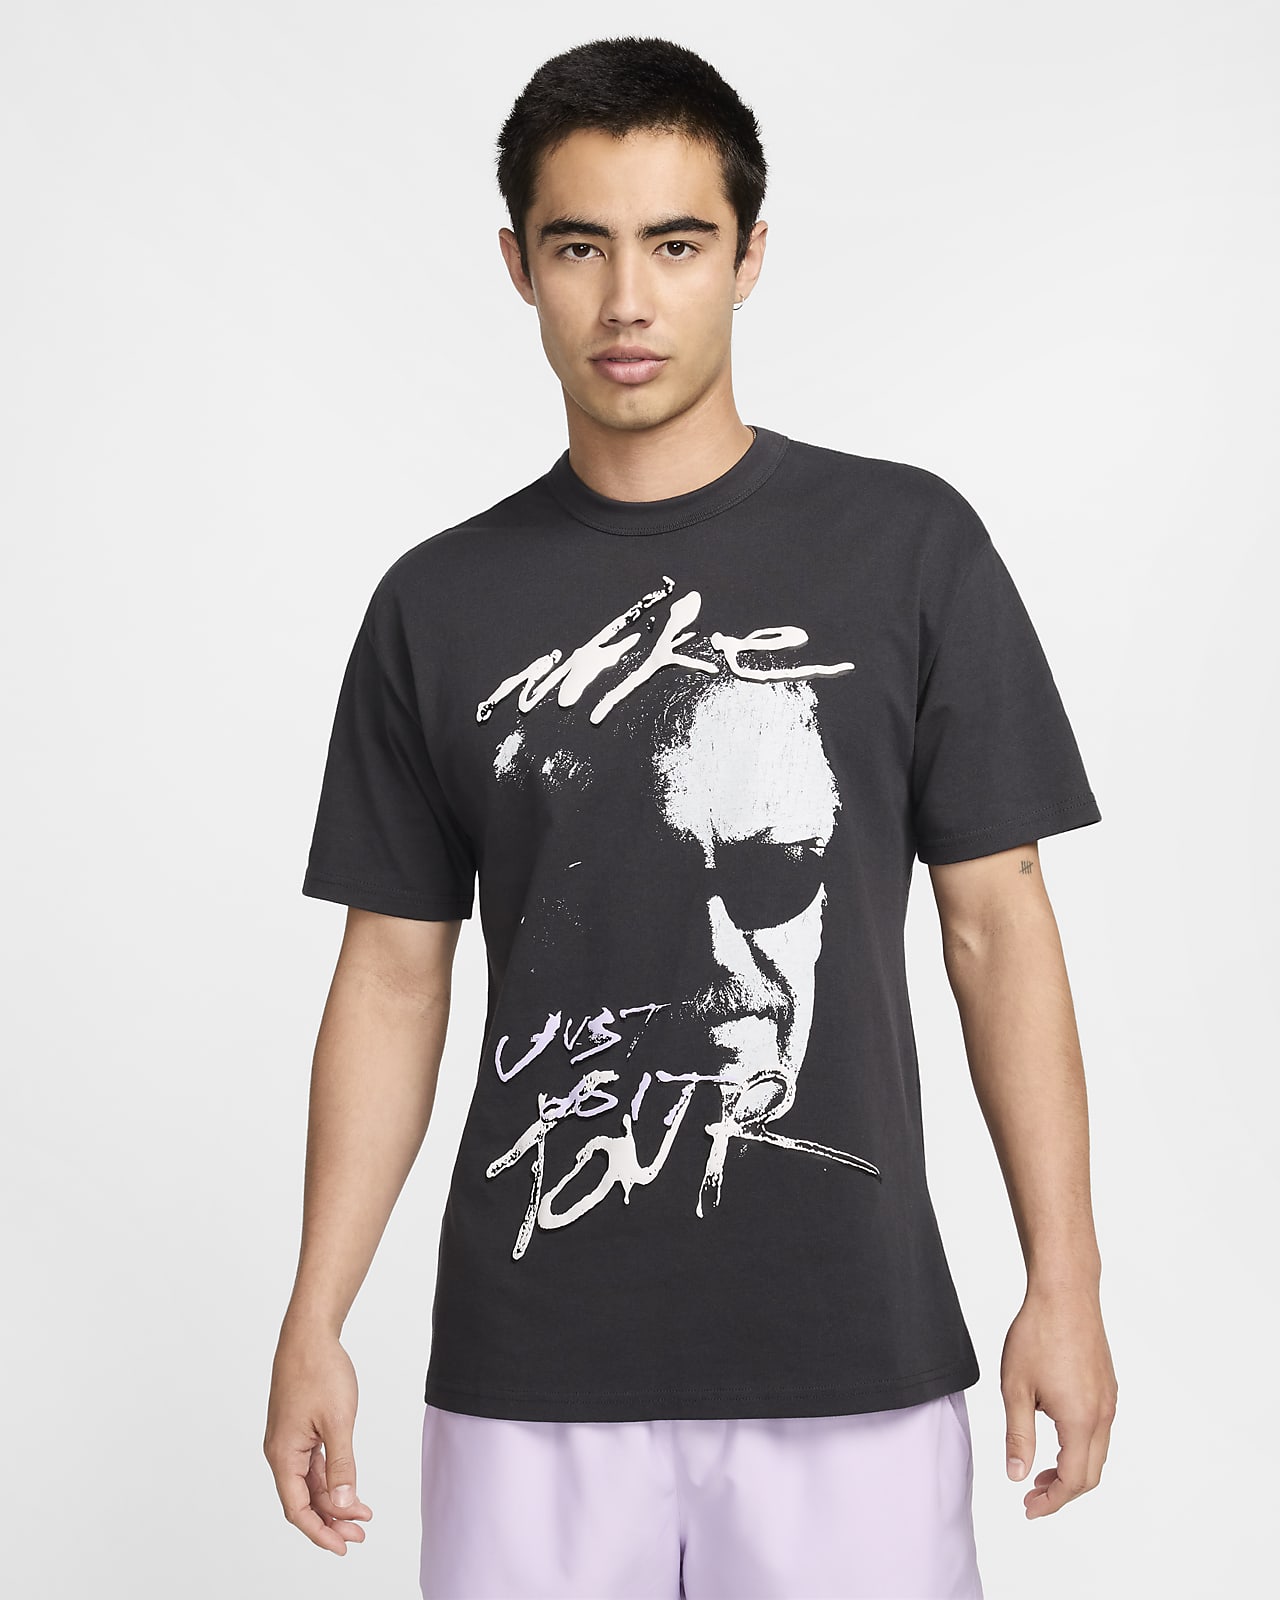 Nike Sportswear Men's Photo T-Shirt